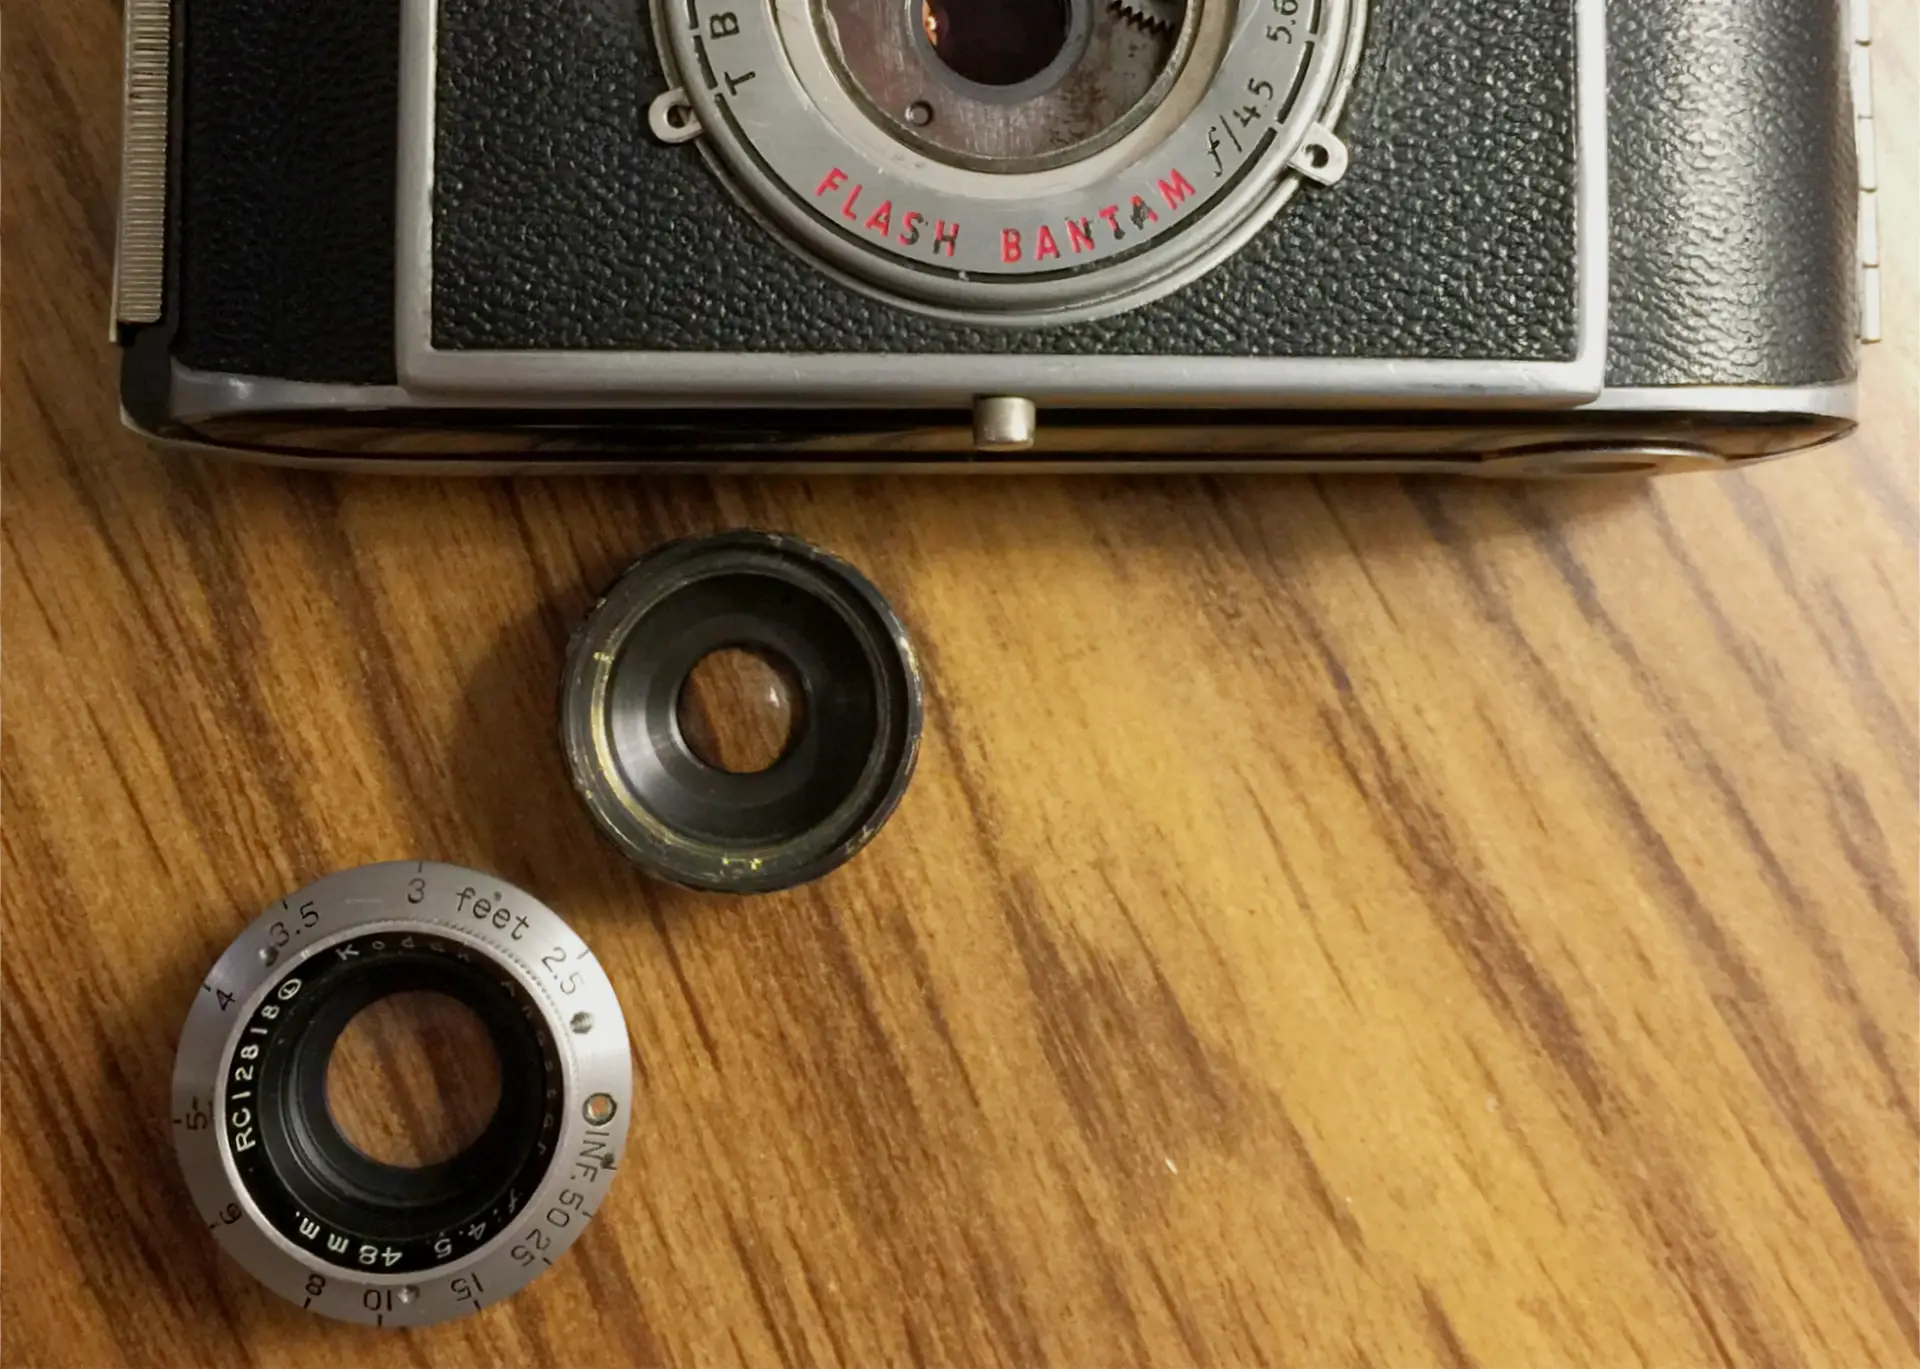 Kodak Flash Bantam lens units 1, 2 and 3